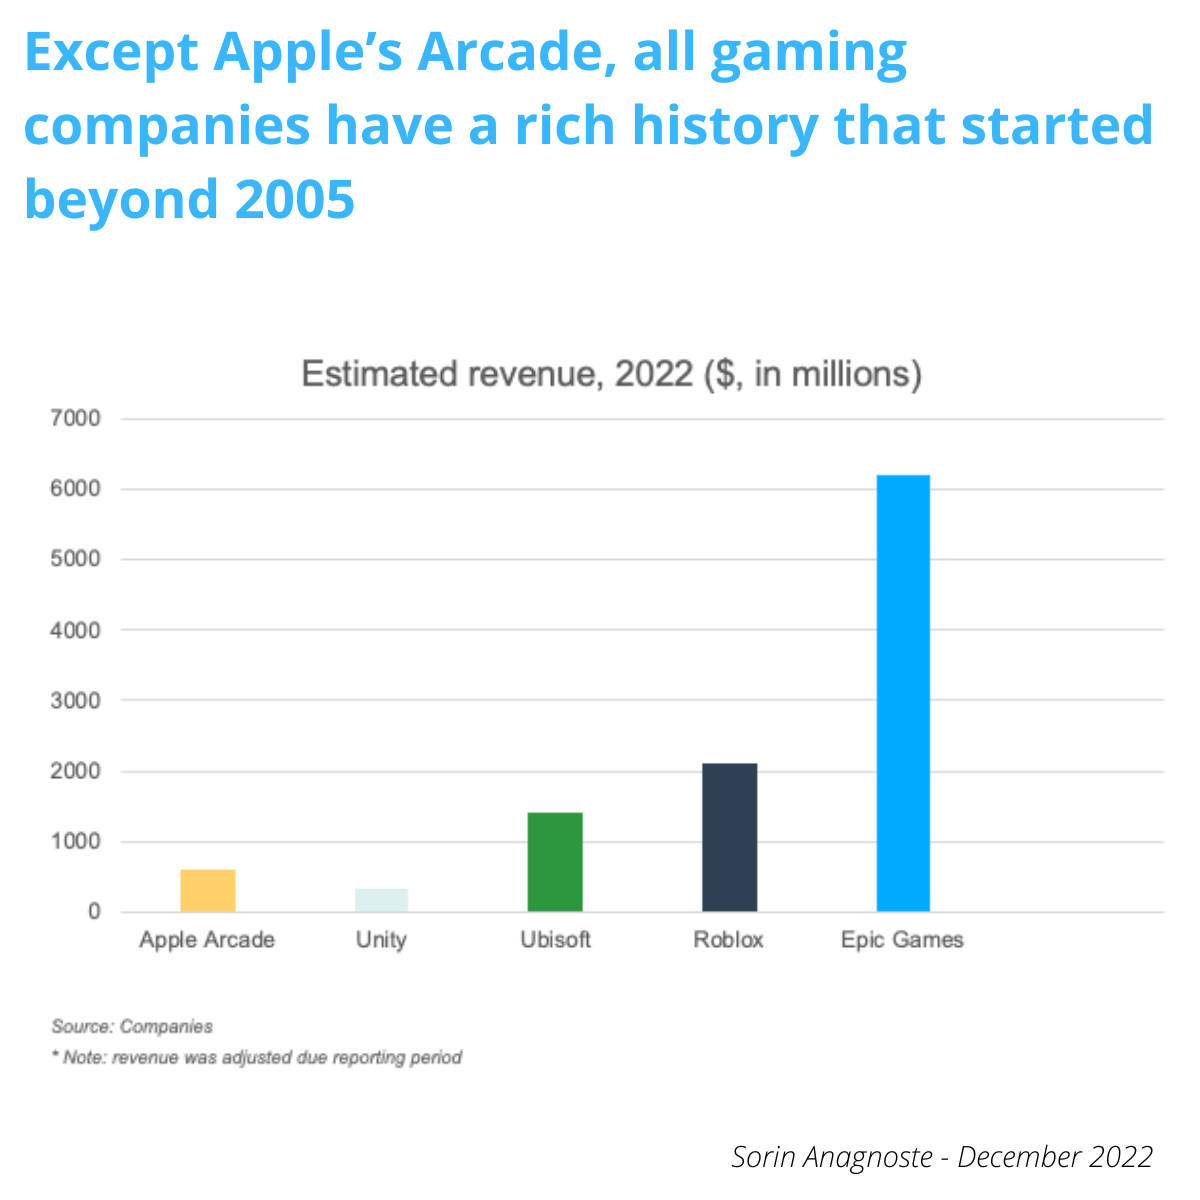 Apple's Arcade revenue